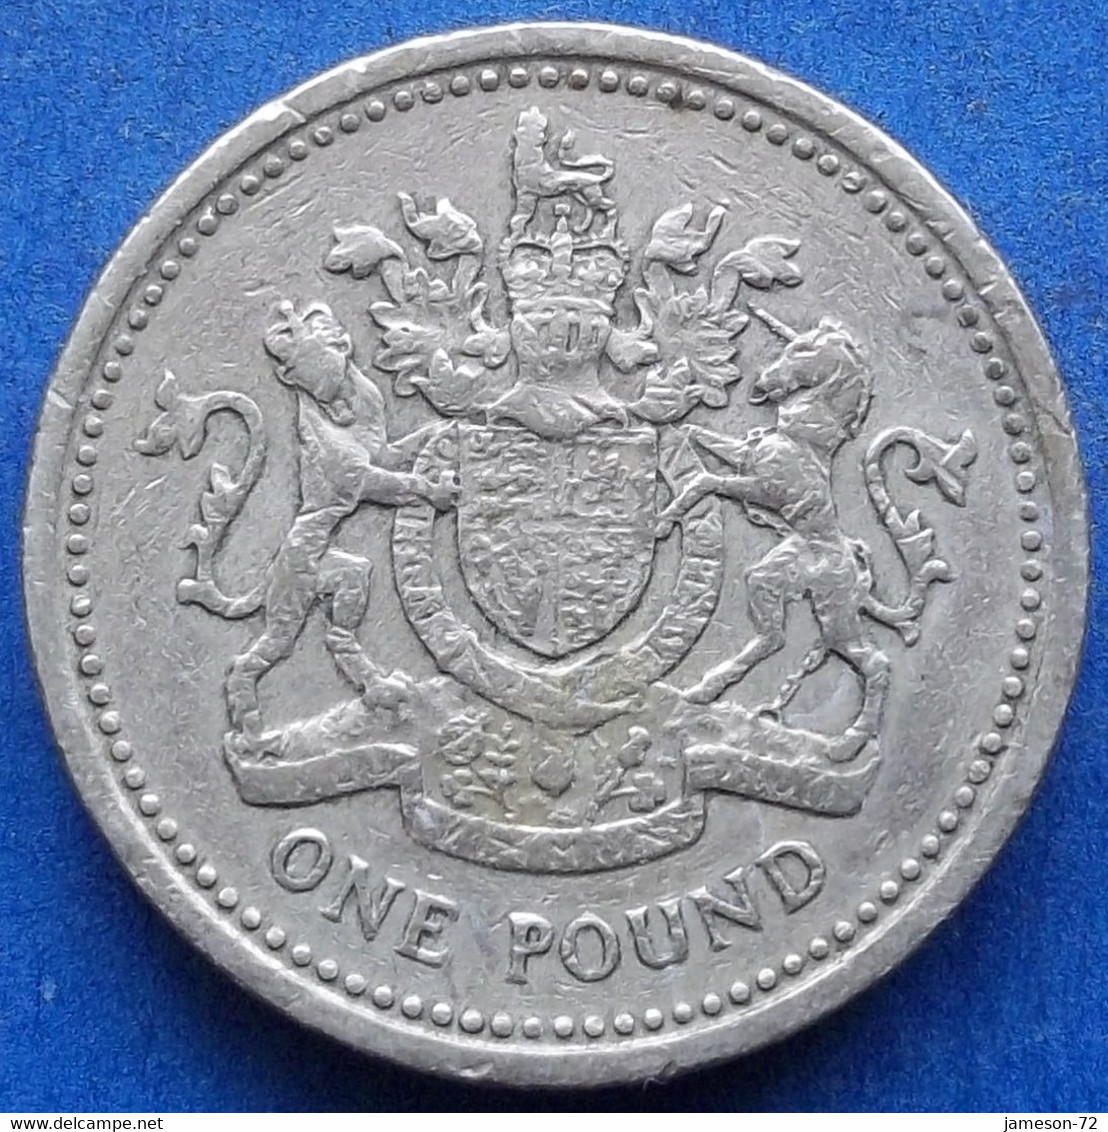 UK - 1 Pound 1983 "Shiel Of Great Britain" KM# 933 Elizabeth II Decimal Coinage (1971-2022) - Edelweiss Coins - 1 Pound